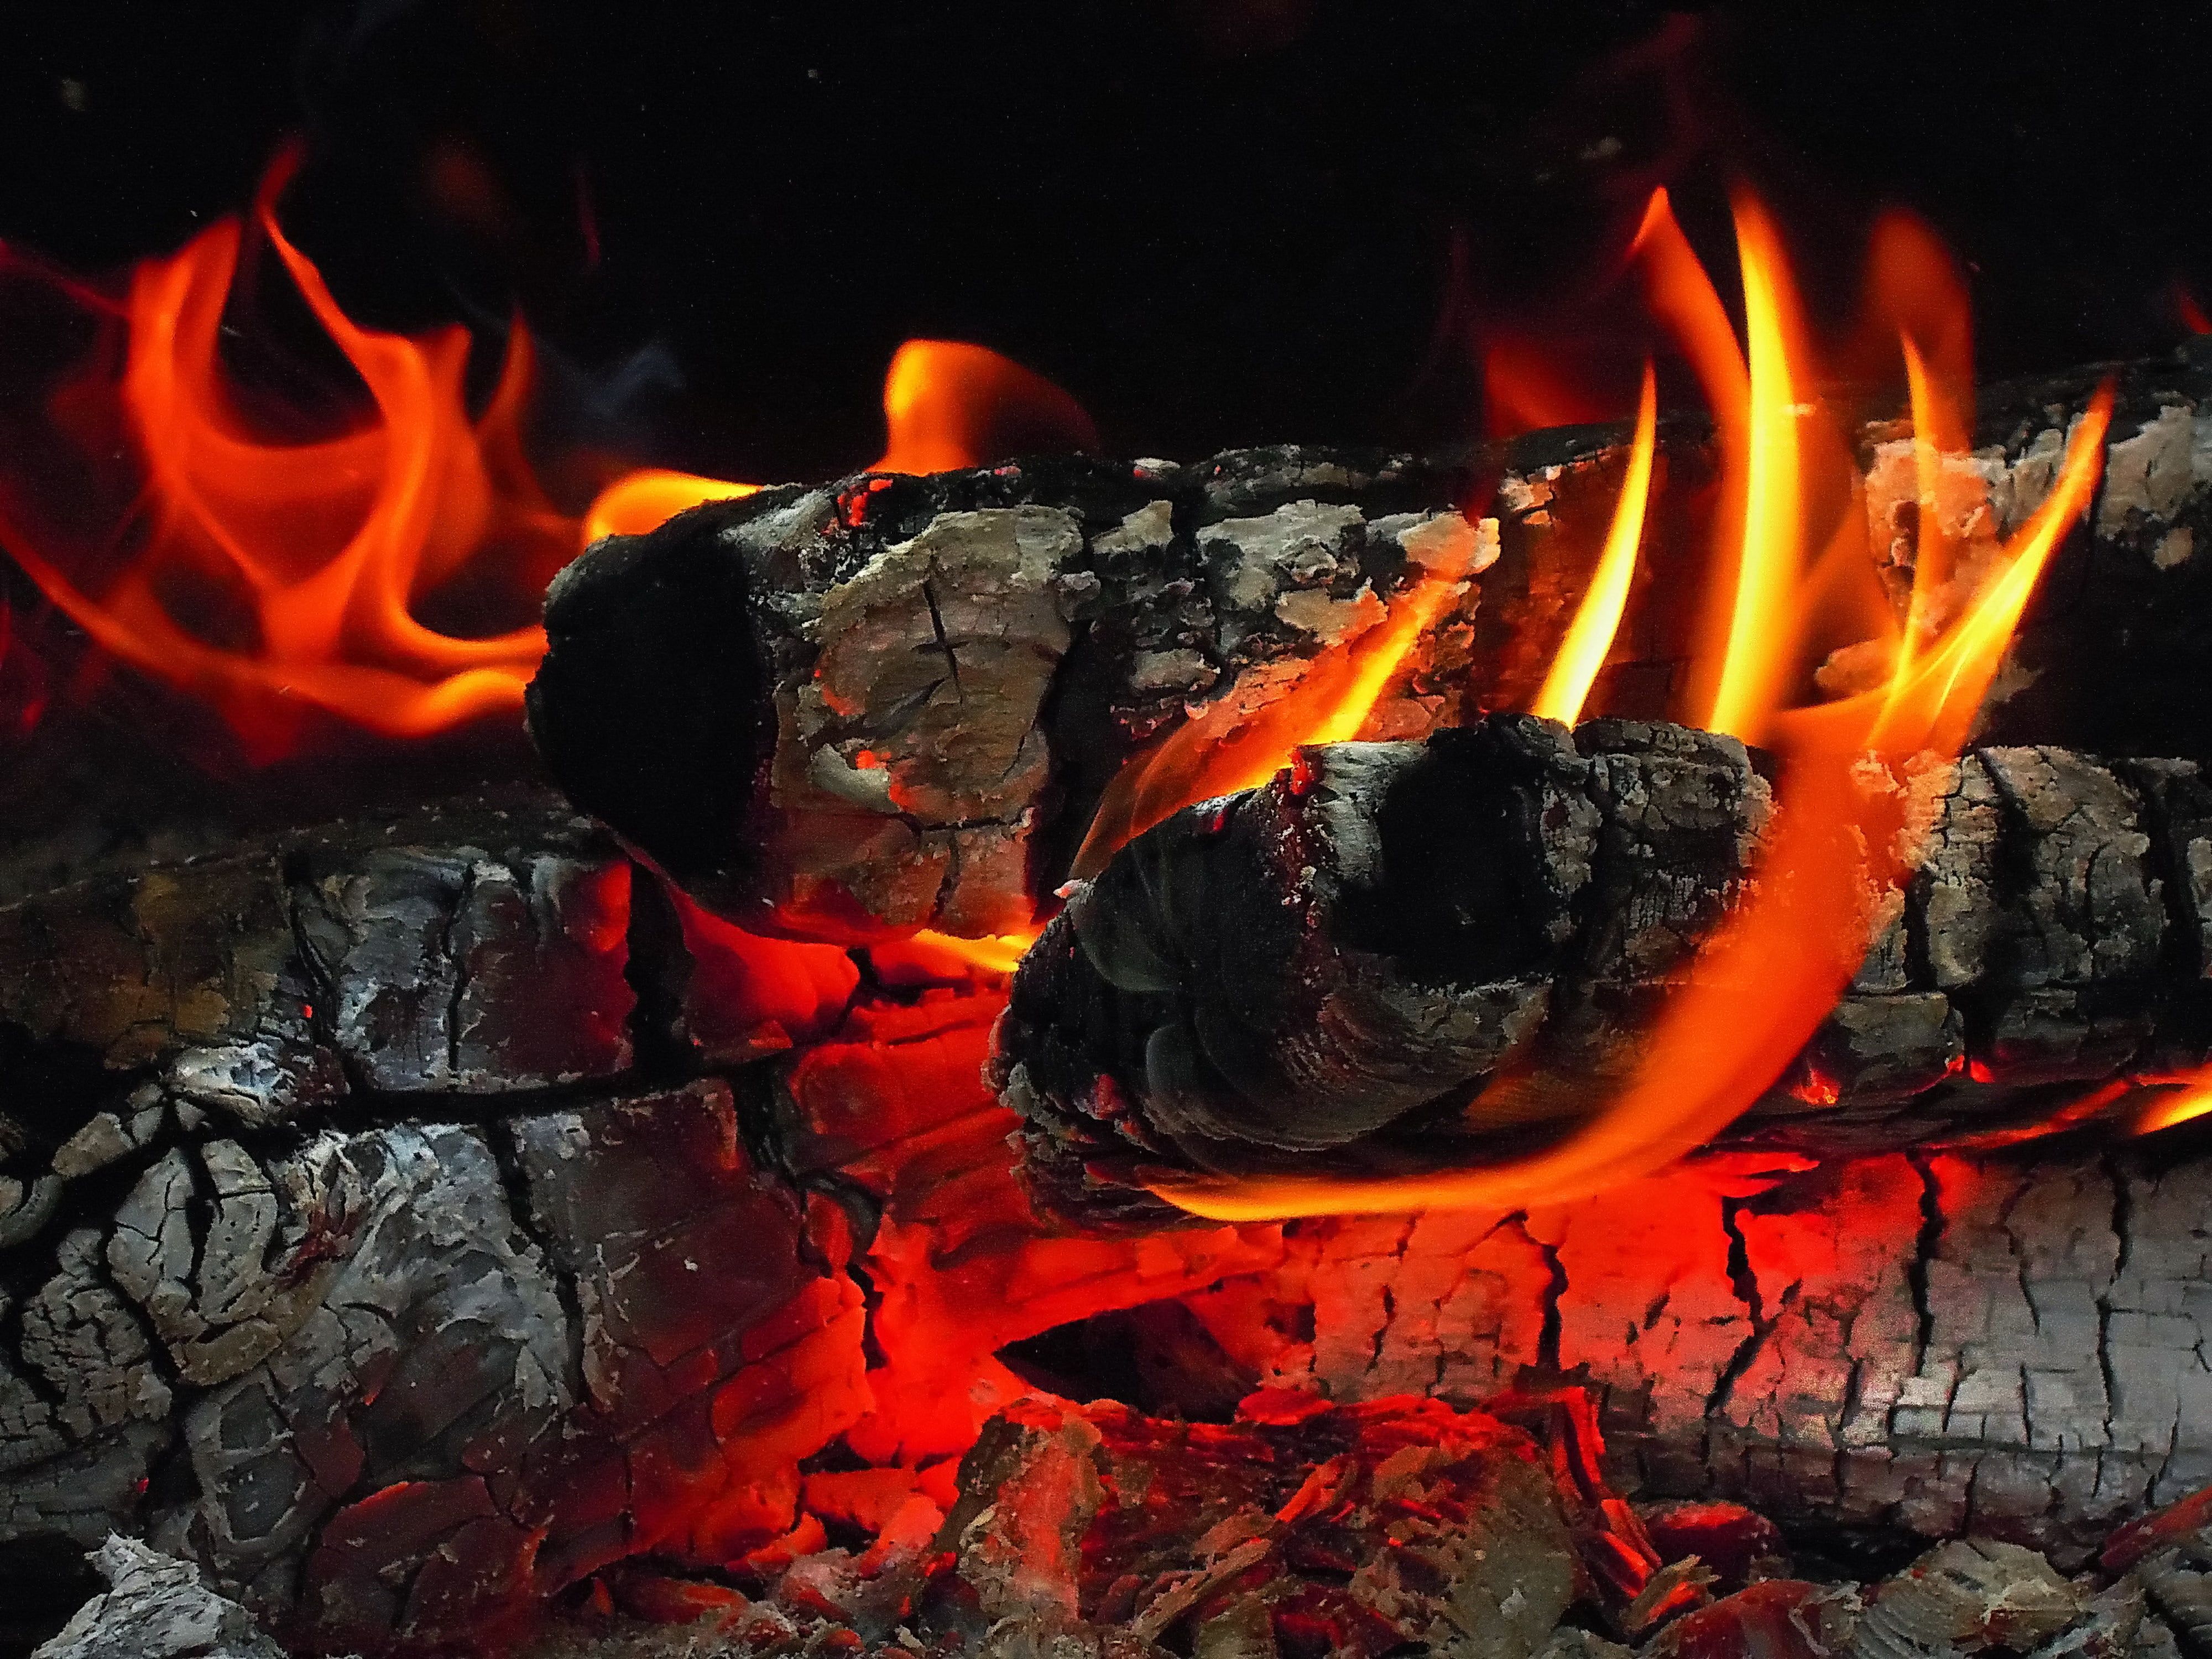 burning charcoal #fire #wood #orange #black #red Coal (Minerals) #burning # 4K #wallpaper #hdw. Fire photography, Photography wallpaper, Background for photography